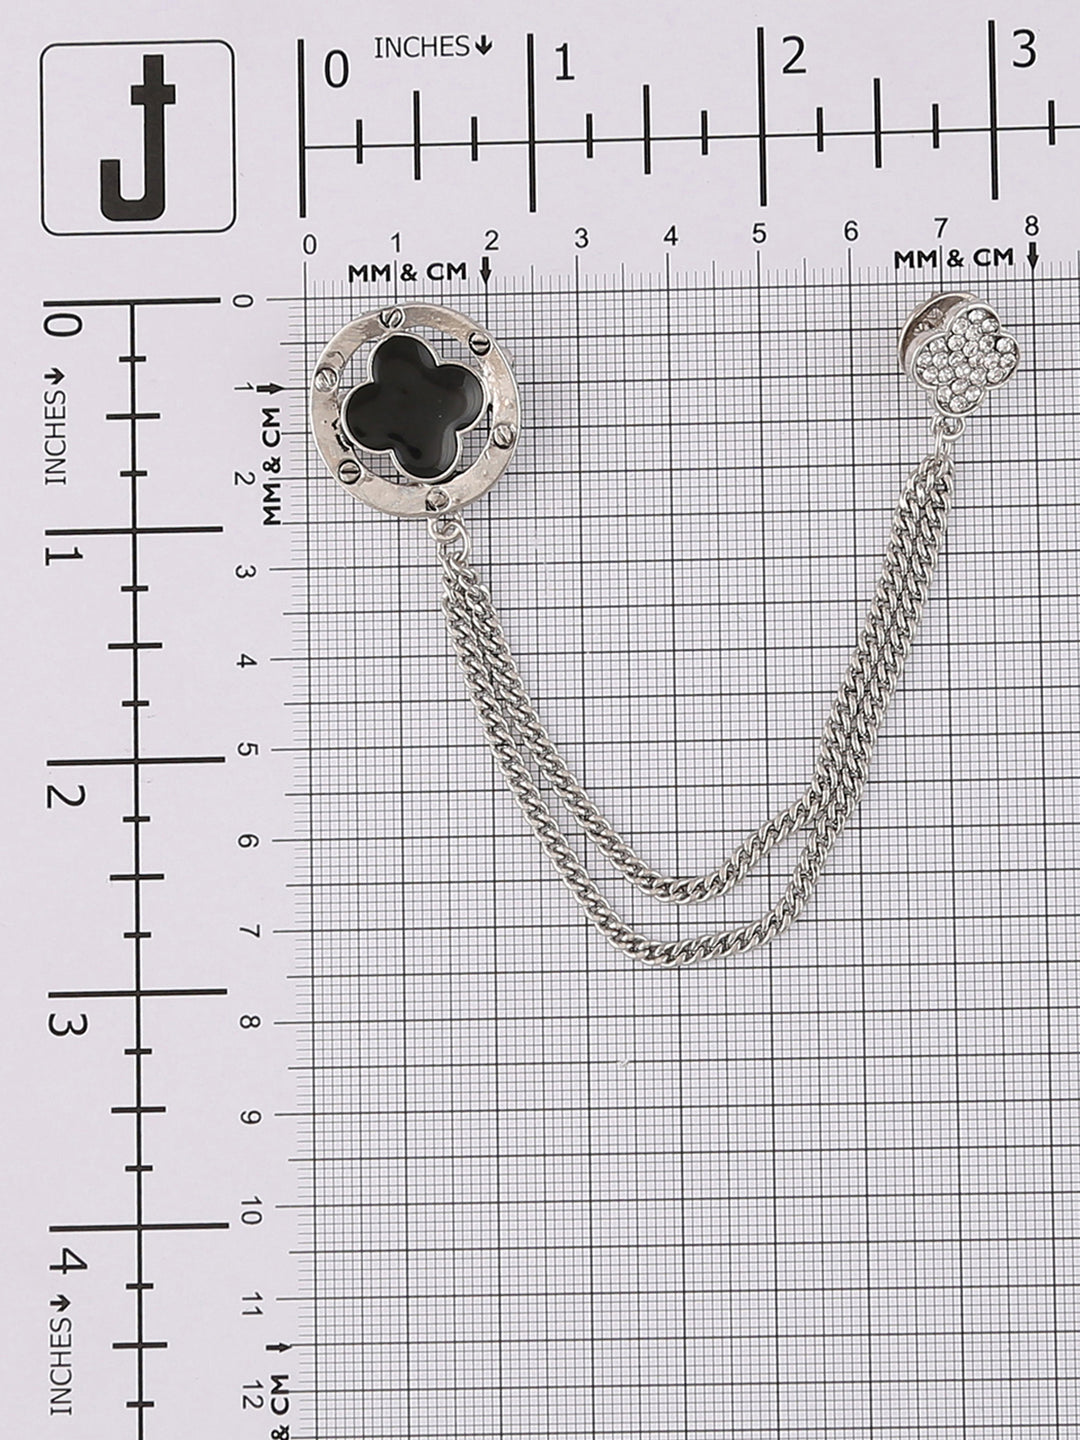 Shiny Silver Charming Fashionable Chain Pin Brooch